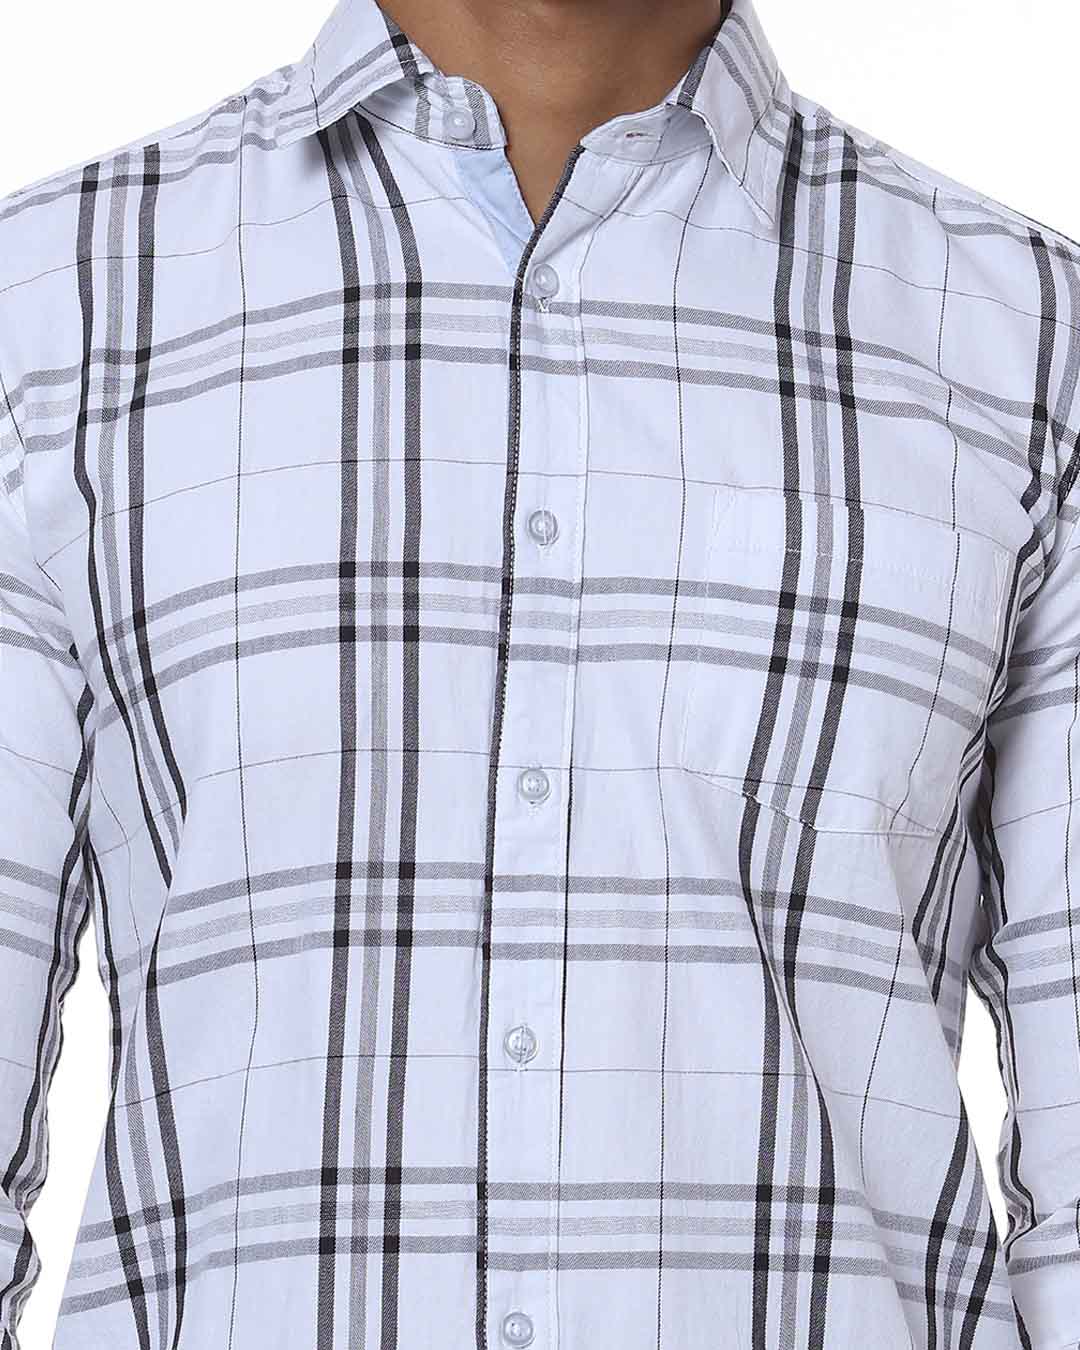 ShopMen Checks Casual Stylish Spread Shirt